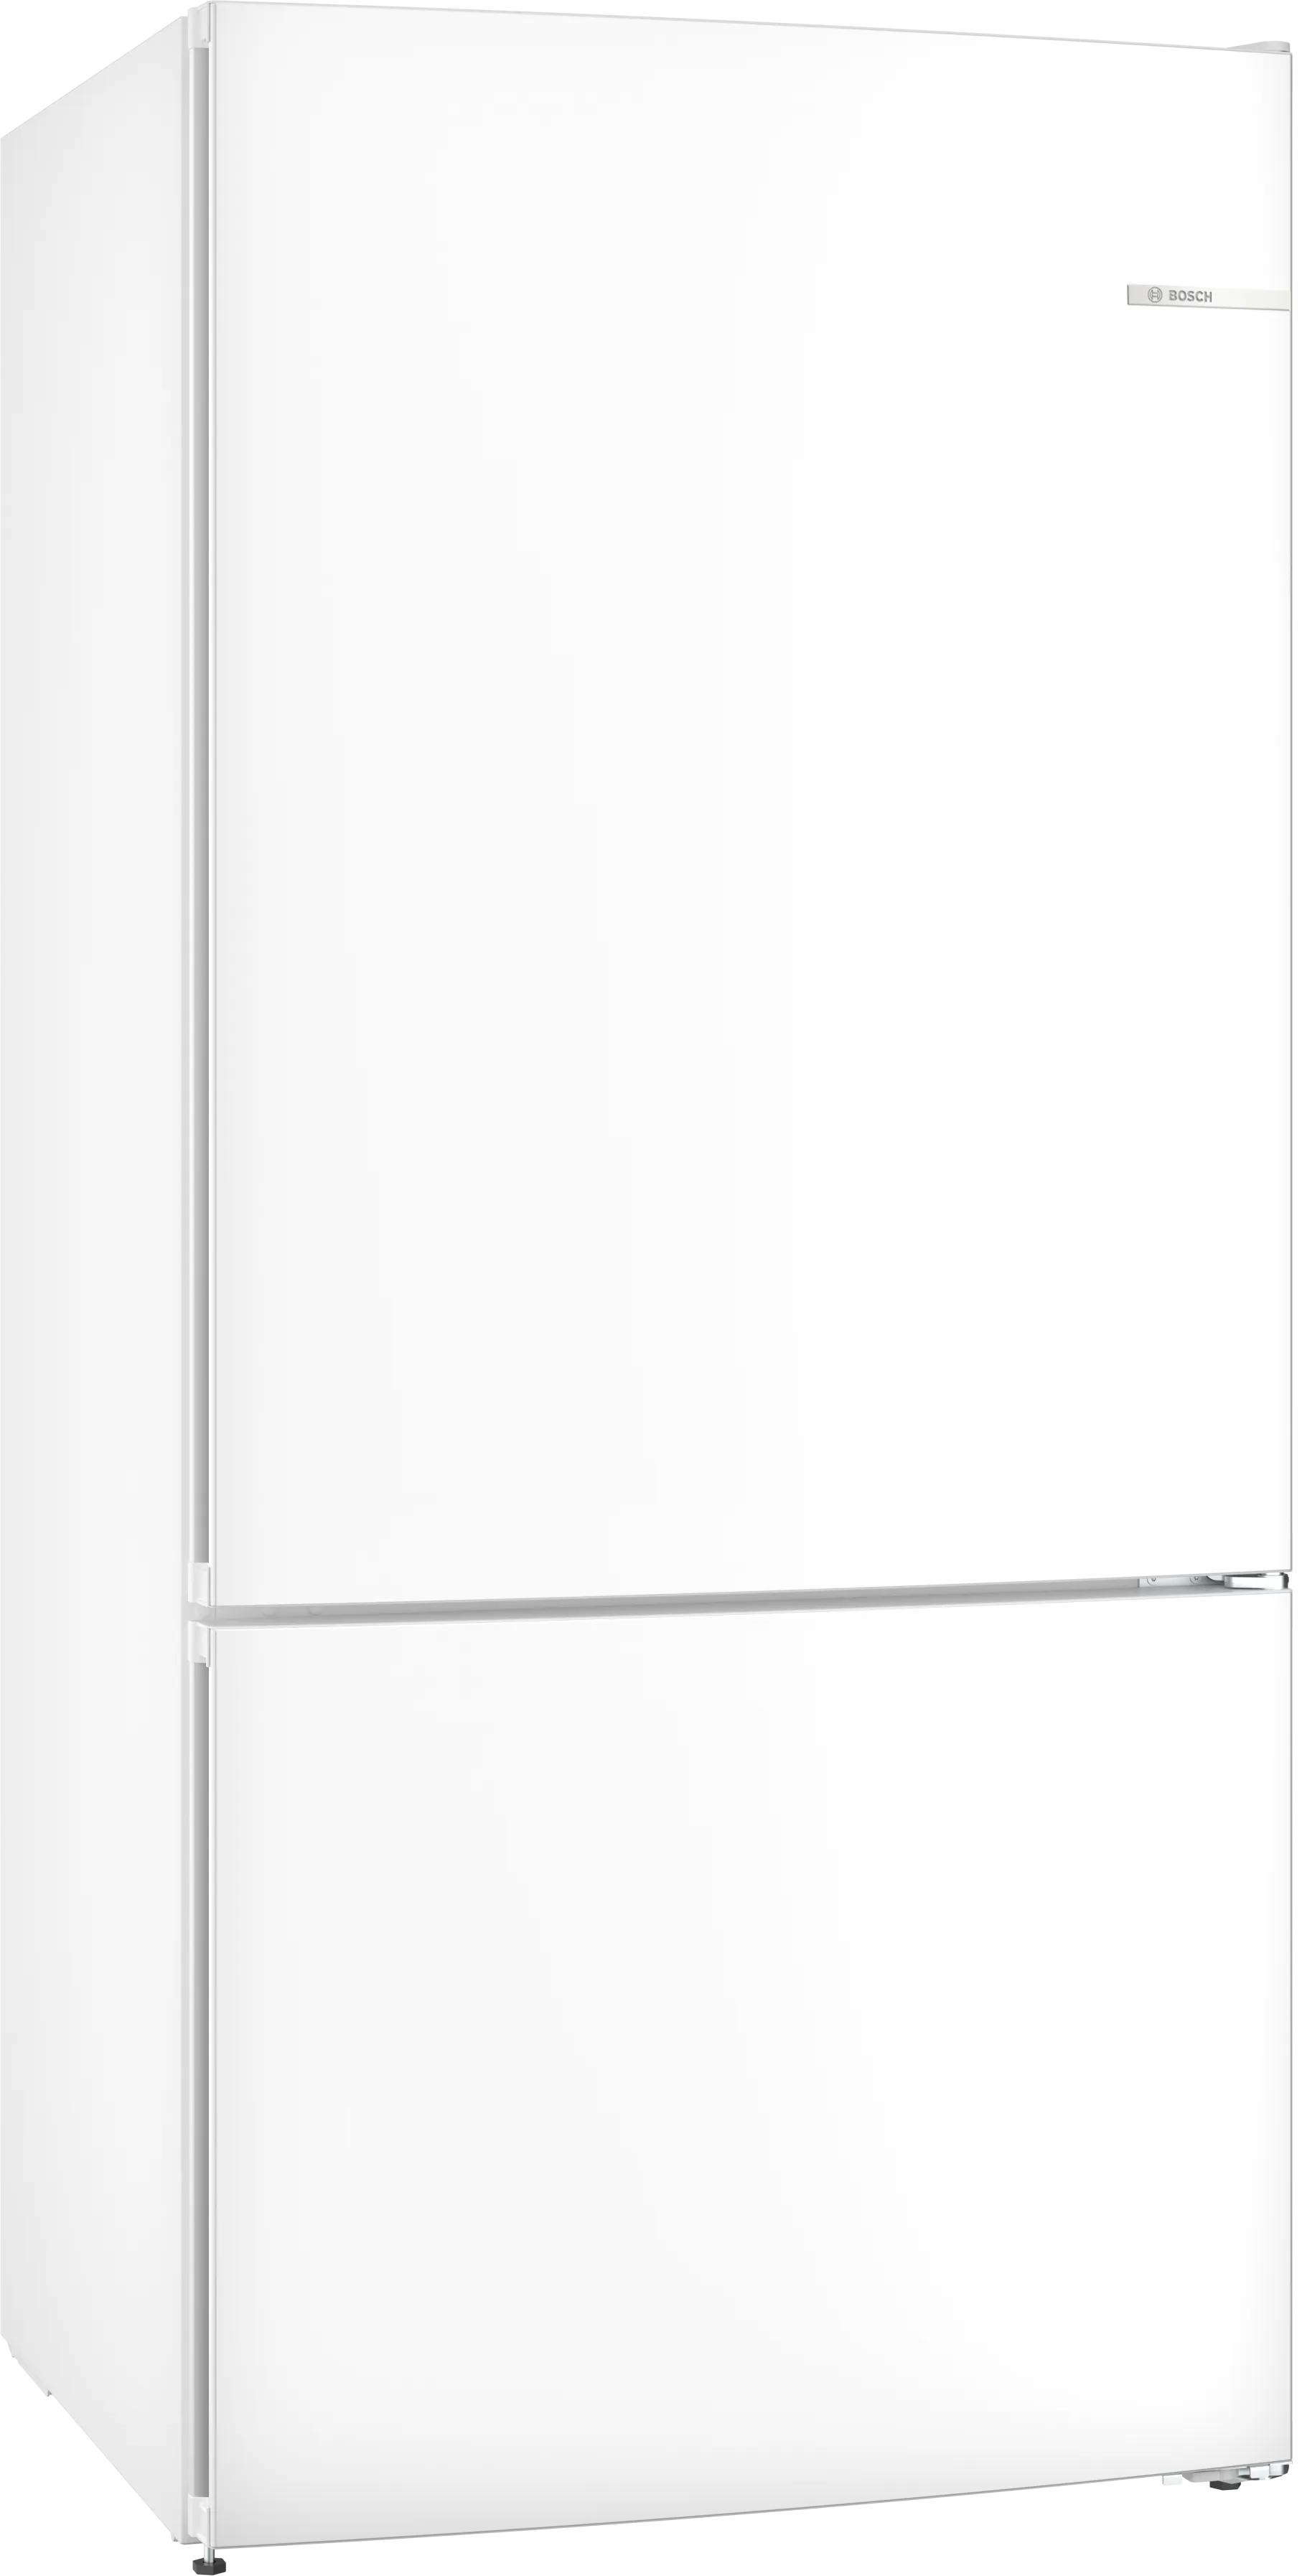 KGN86VWE0N E Enerji Sınıfı 631 L Alttan Donduruculu NoFrost Buzdolabı Beyaz